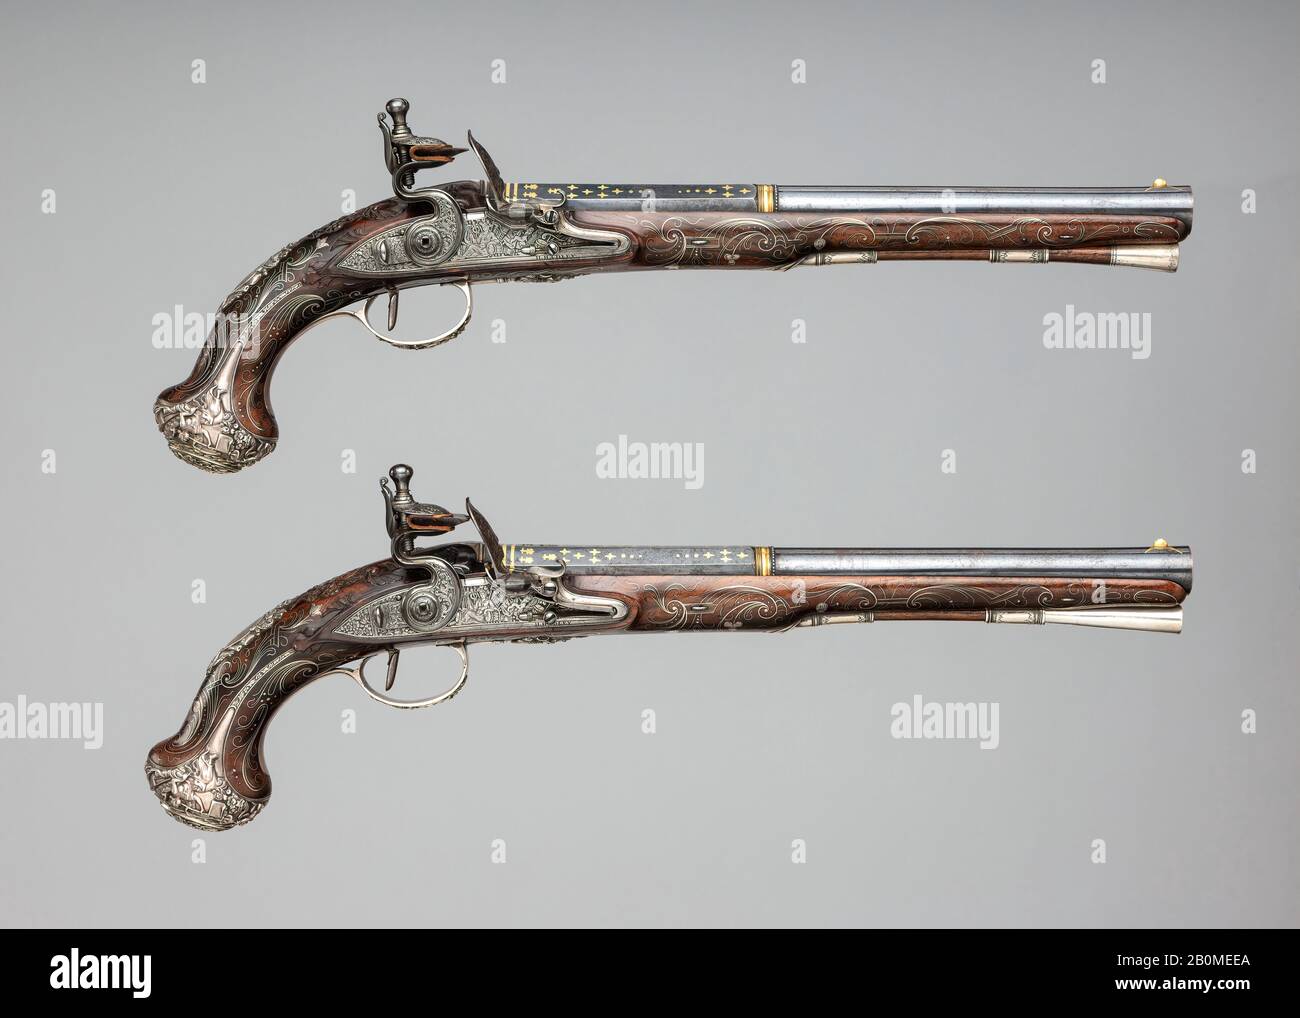 Henry Hadley, Pair of Flintlock Pistols with Square-Drive Key, British, London, ca. 1765, London, British, London, Steel, wood (walnut), silver, gold, copper alloy, Each pistol: L. 16 3/4 in. (42.5 cm); L. of barrel 11 1/4 in. (28.6 cm); Cal. .63 in. (16 mm); Wt. of pistol (a): 2 lb. 3.2 oz. (998 g); Wt. of pistol (b): 2 lb. 3.7 oz. (1012 g); drive key (c): H. 2 3/8 in. (6.03 cm); L. 1 9/16 in. (3.97 cm); Wt. 0.8 oz. (21 g), Firearms-Pistols-Flintlock Stock Photo